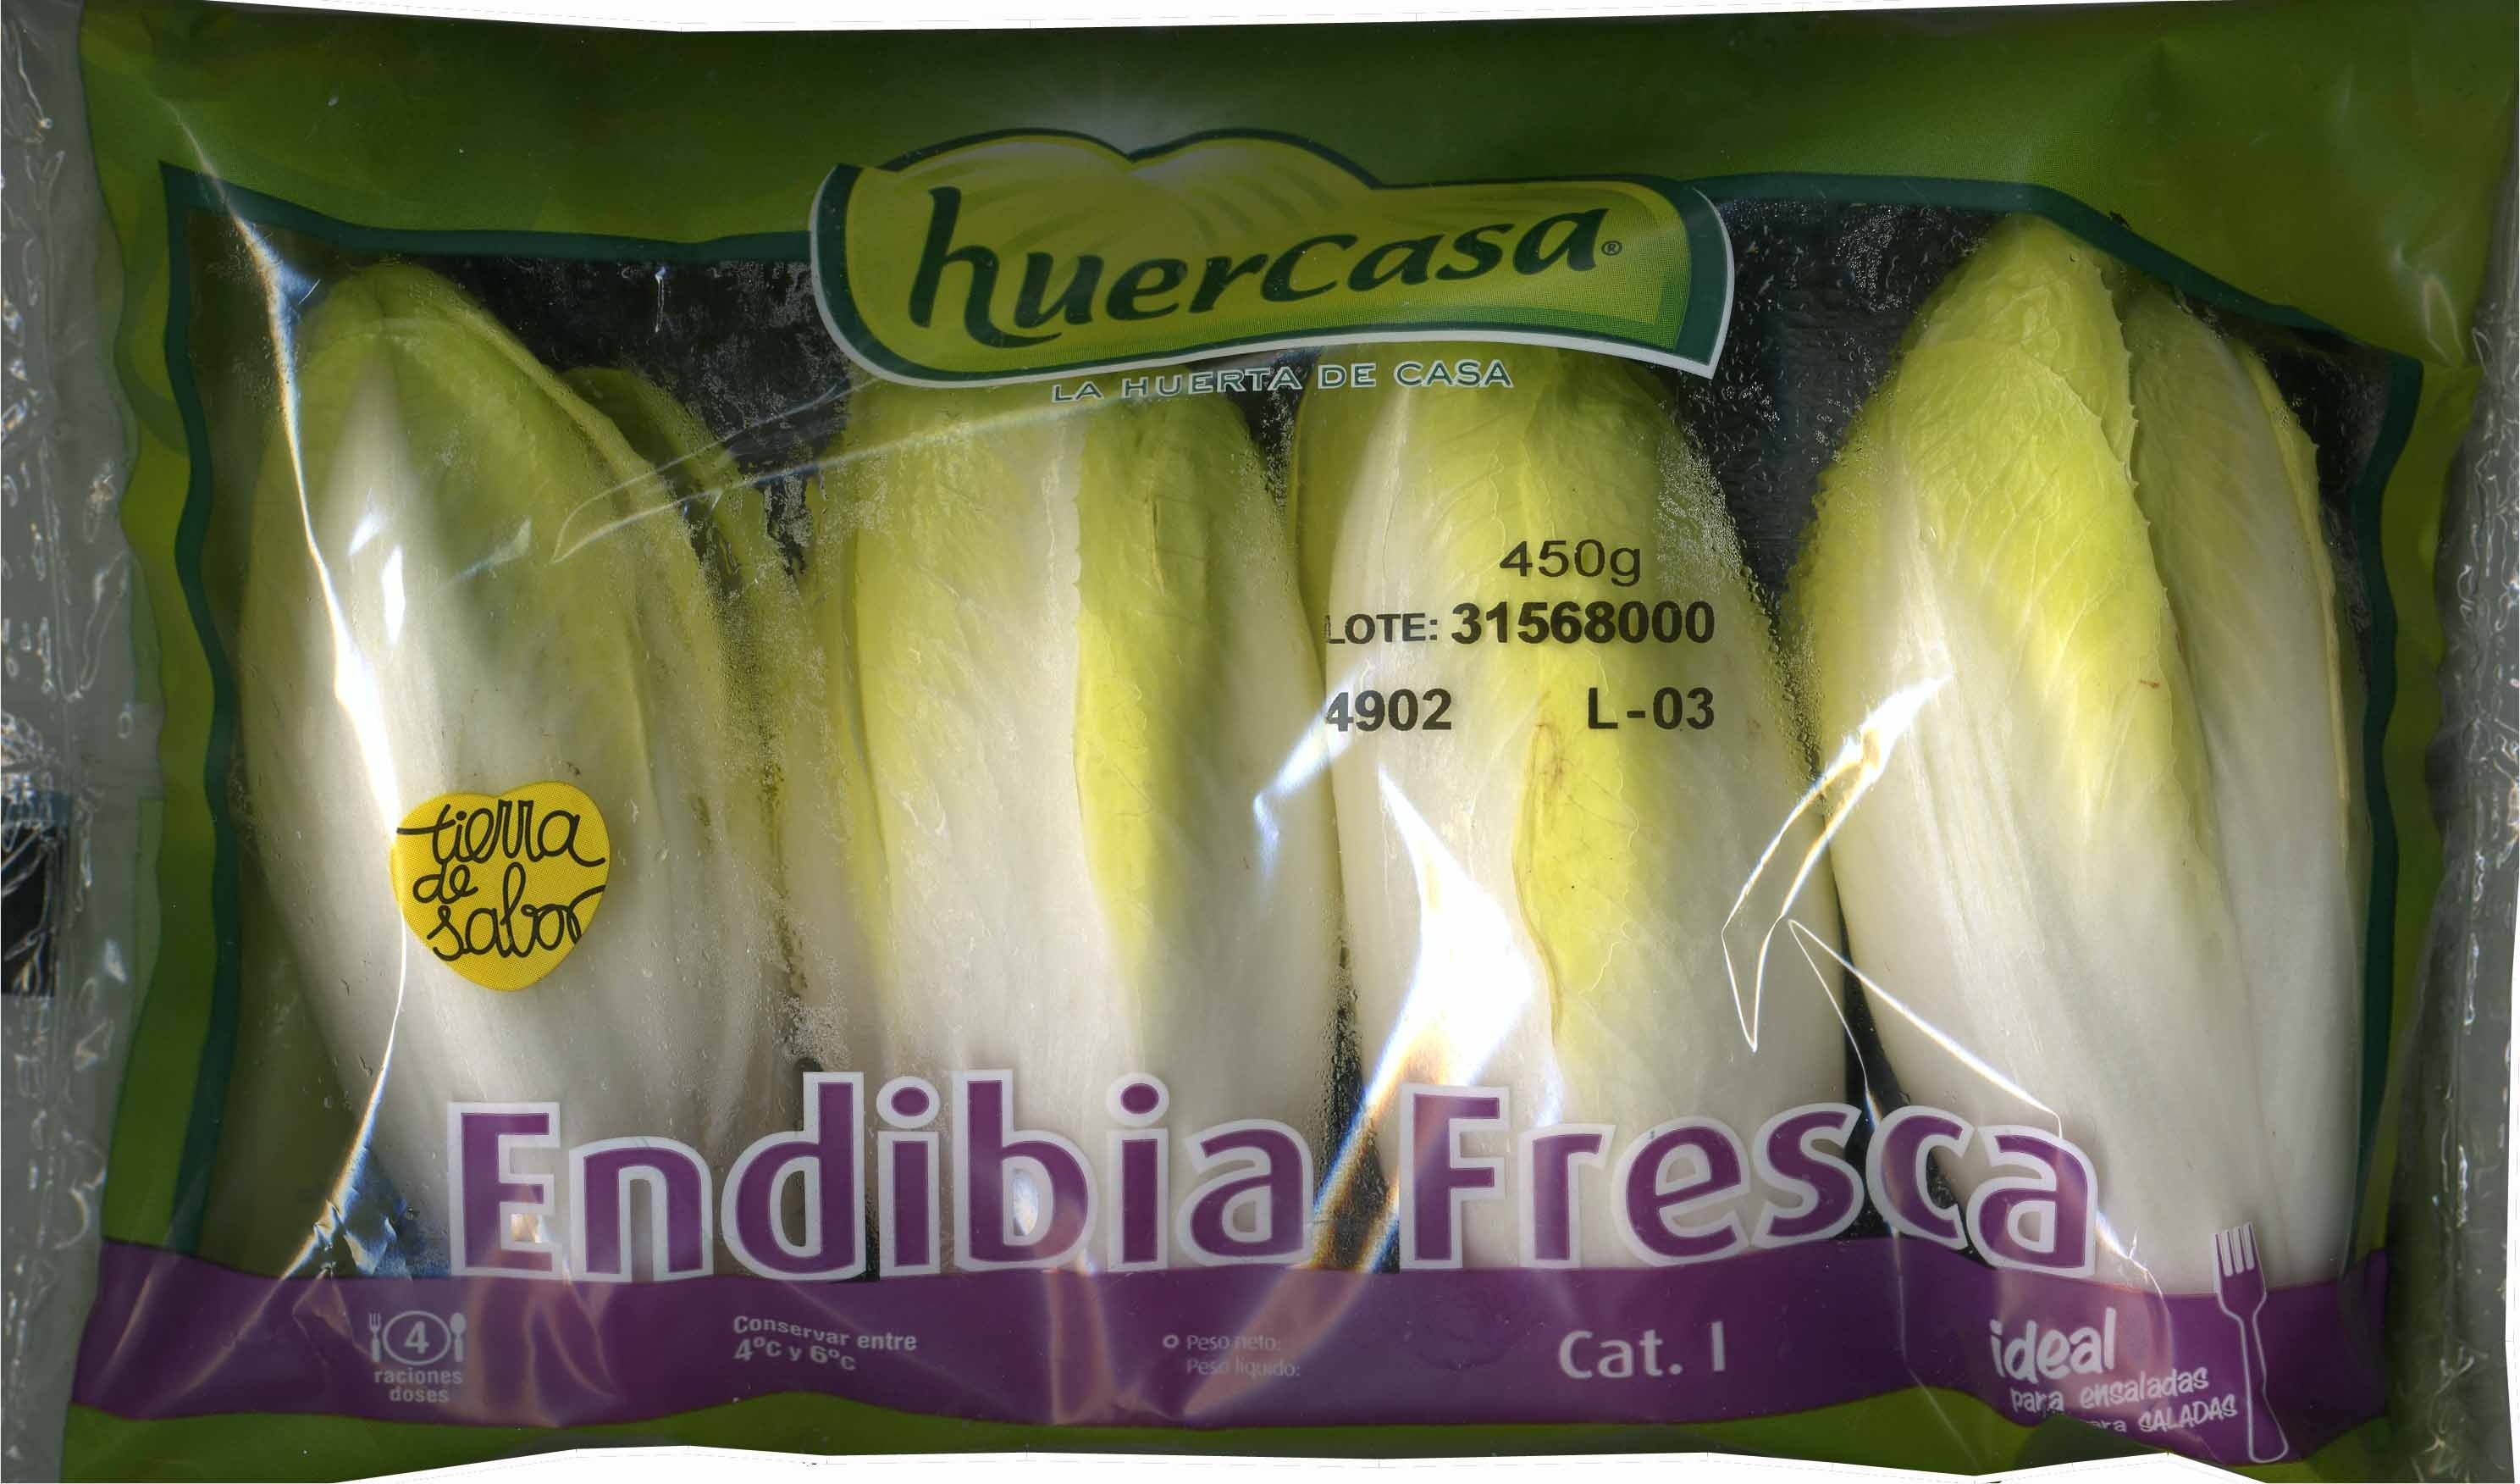 Endibia fresca - Product - es